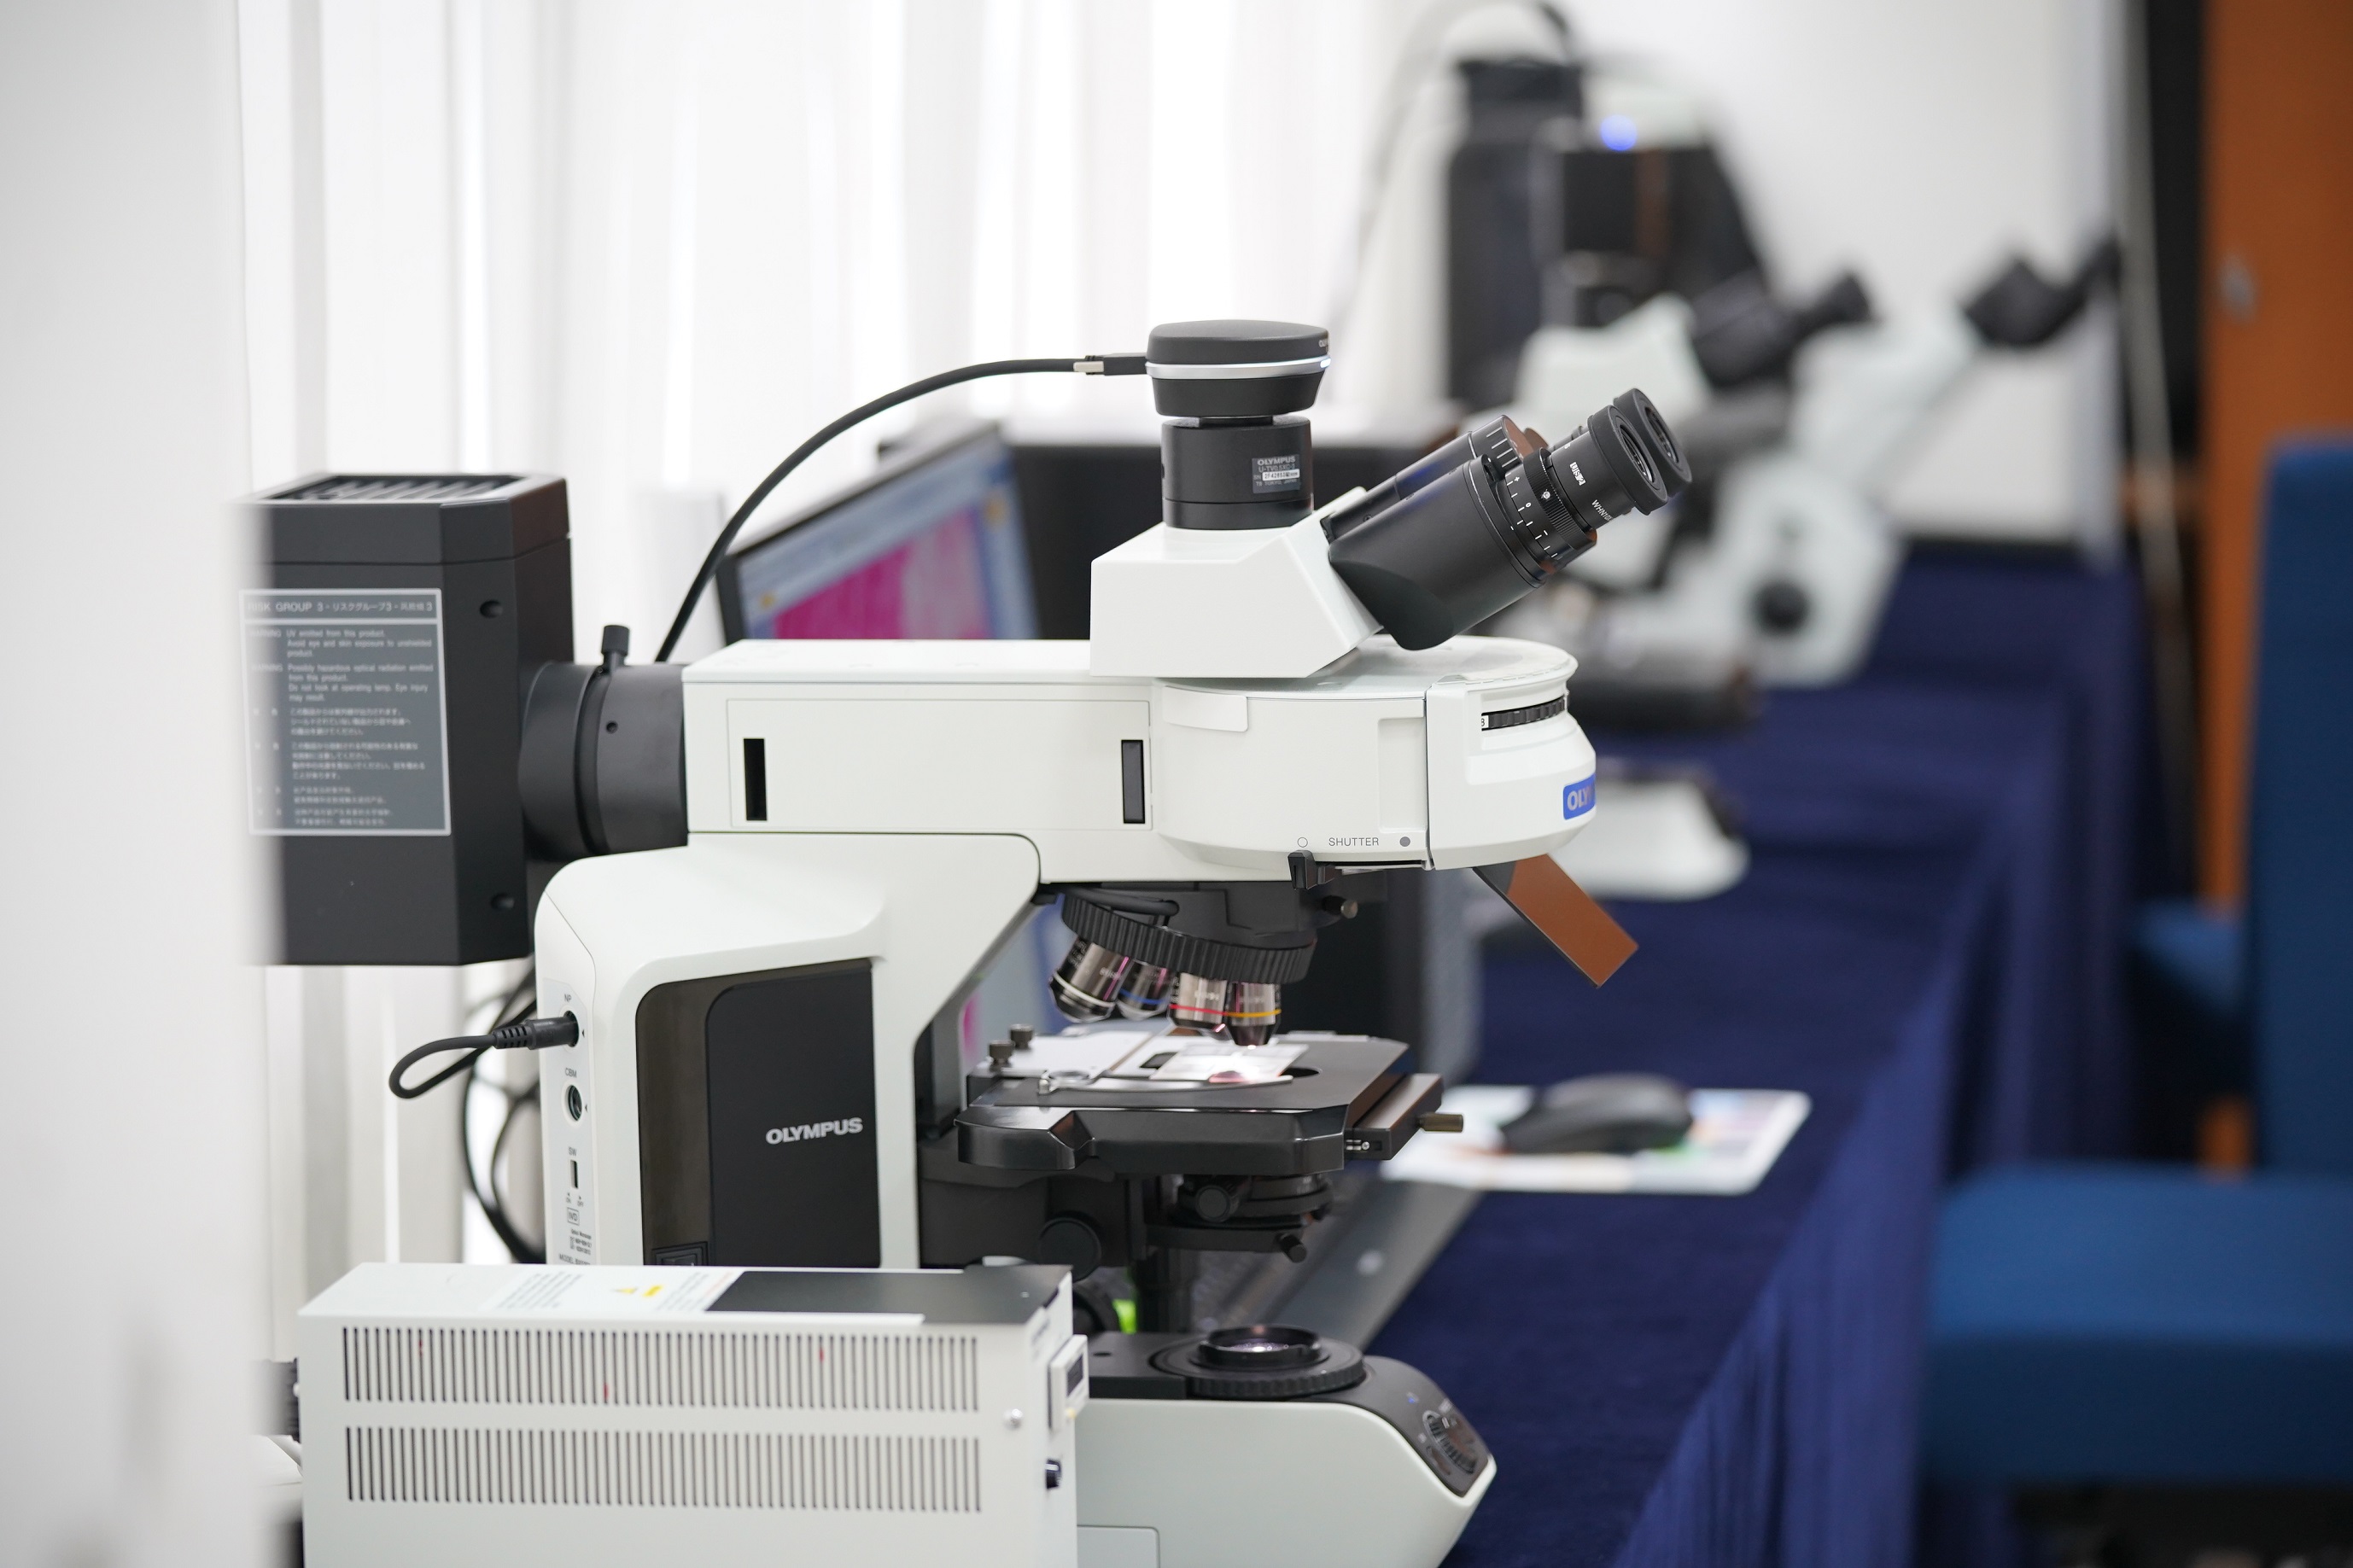 ppnn-itb-kenalkan-fluorescence-dan-confocal-microscope-penunjang-penelitian-mutakhir-di-bidang-life-science